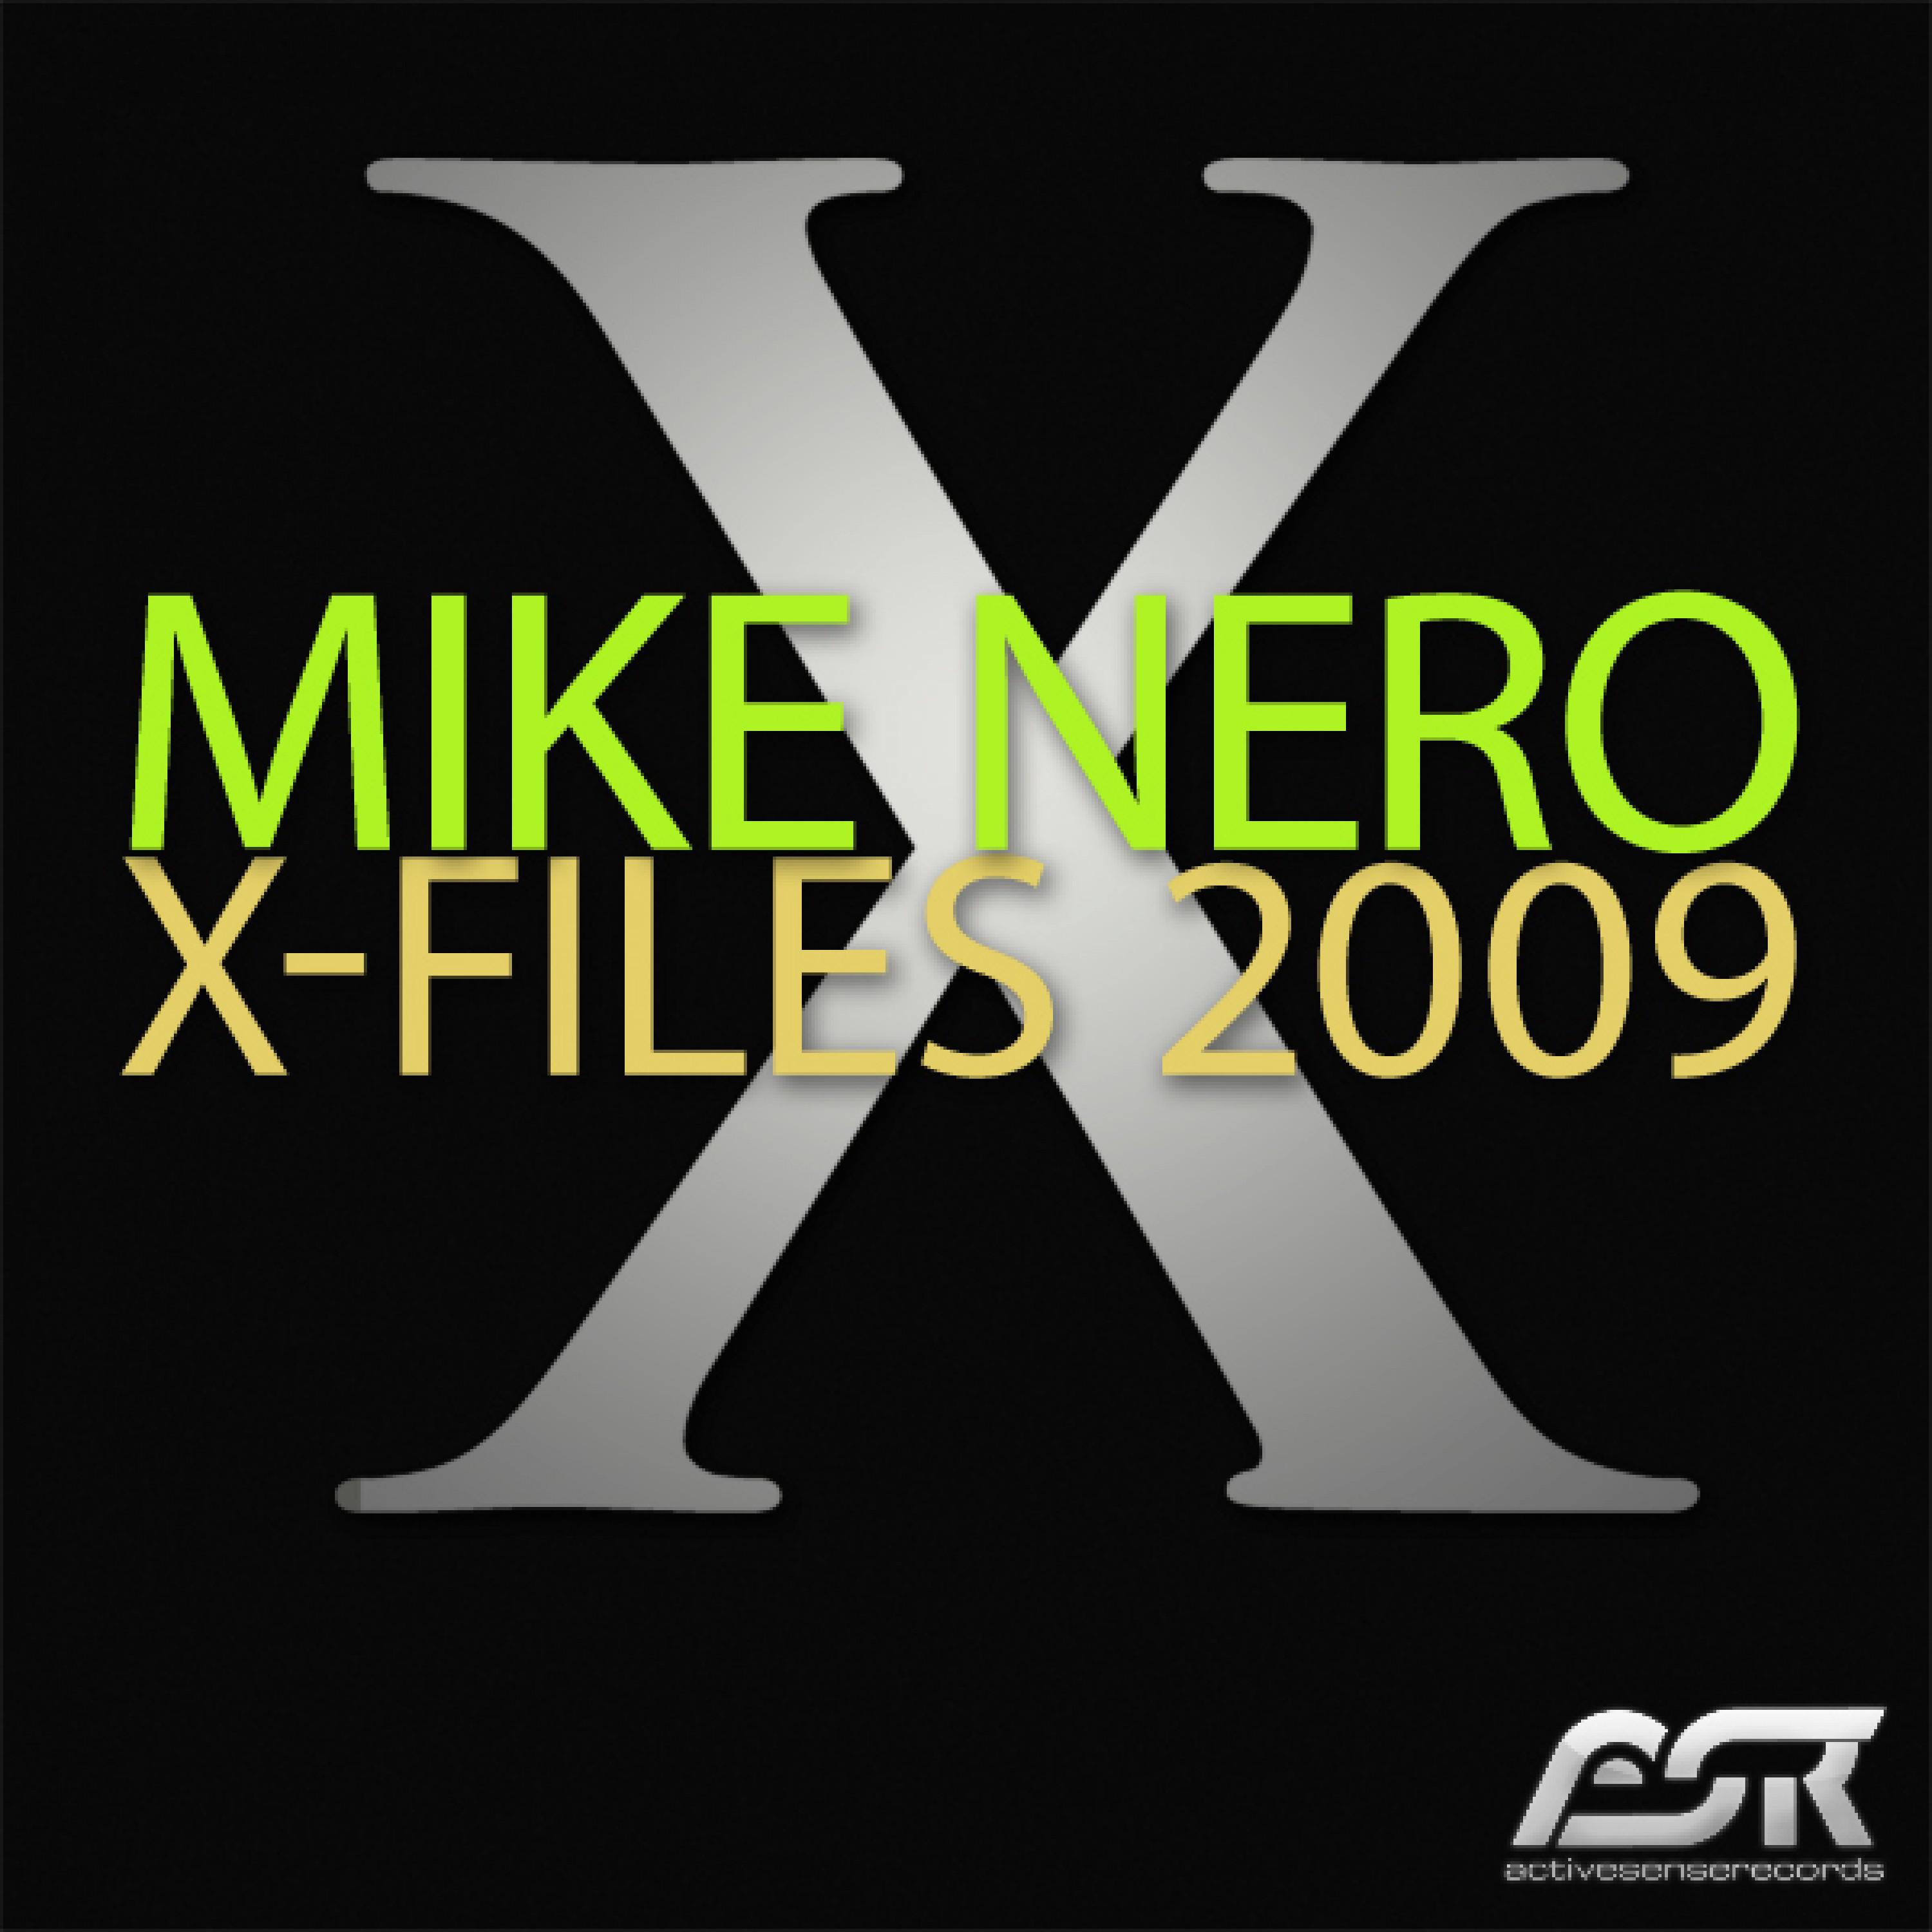 X-Files 2009 (Disco Cell Mix)